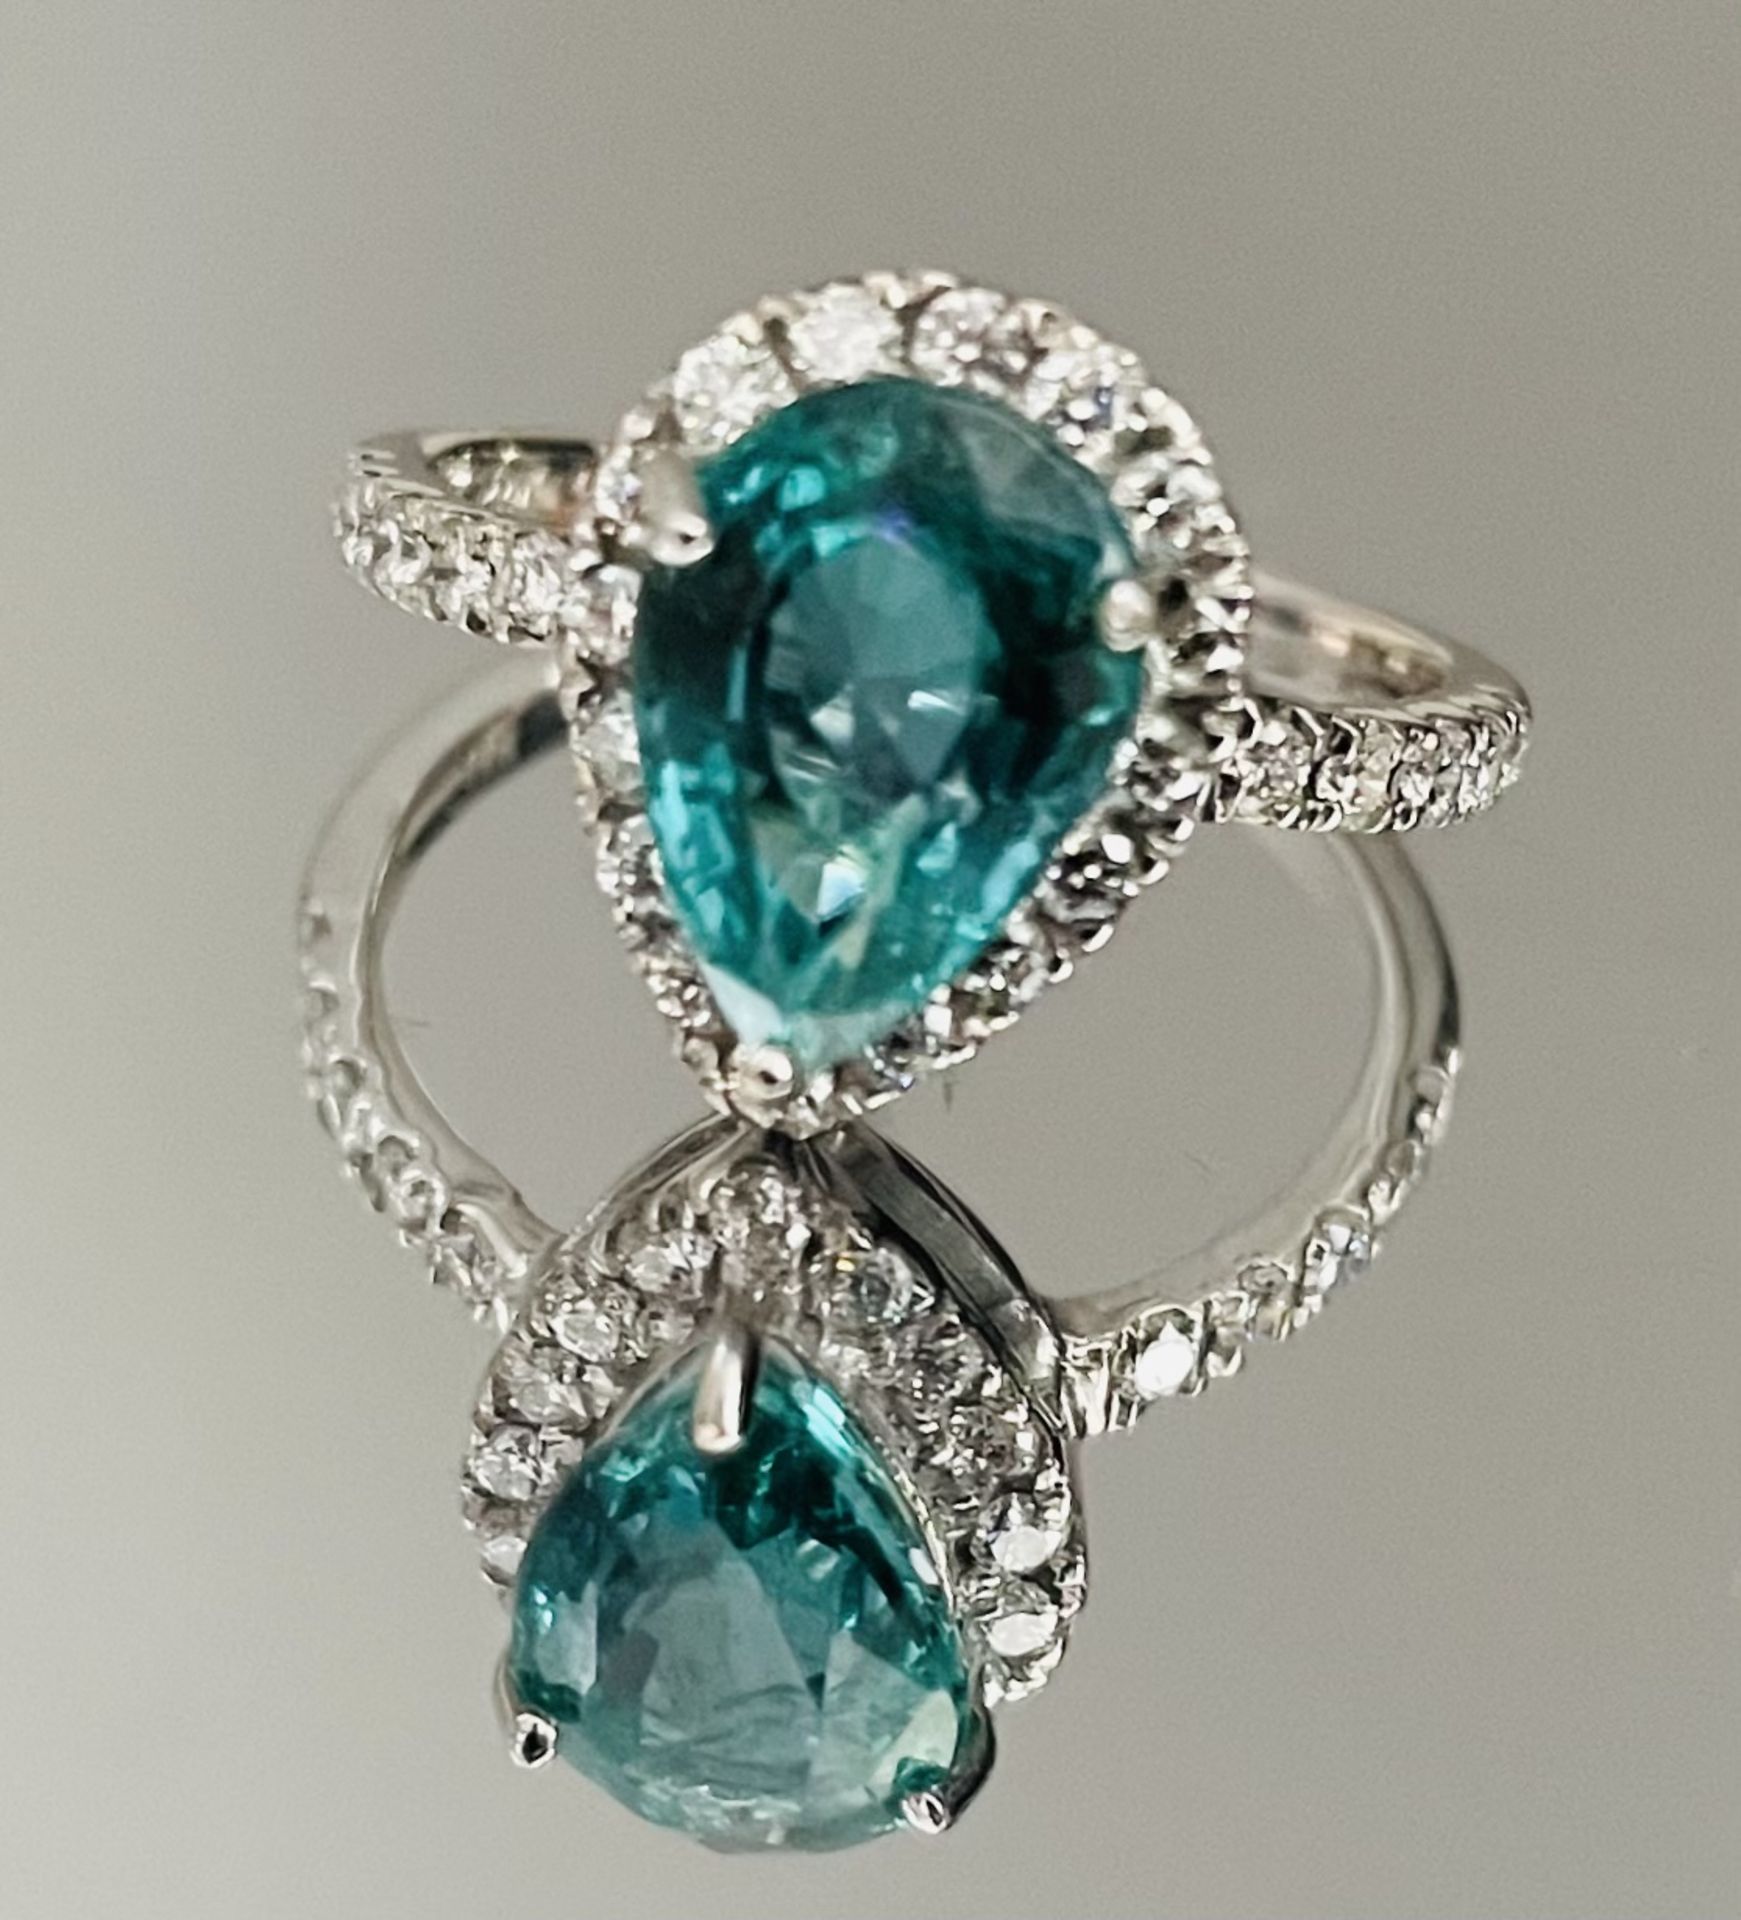 2.60 Carats Zambian Emerald With Natural Diamonds & 18k White Gold - Image 2 of 4